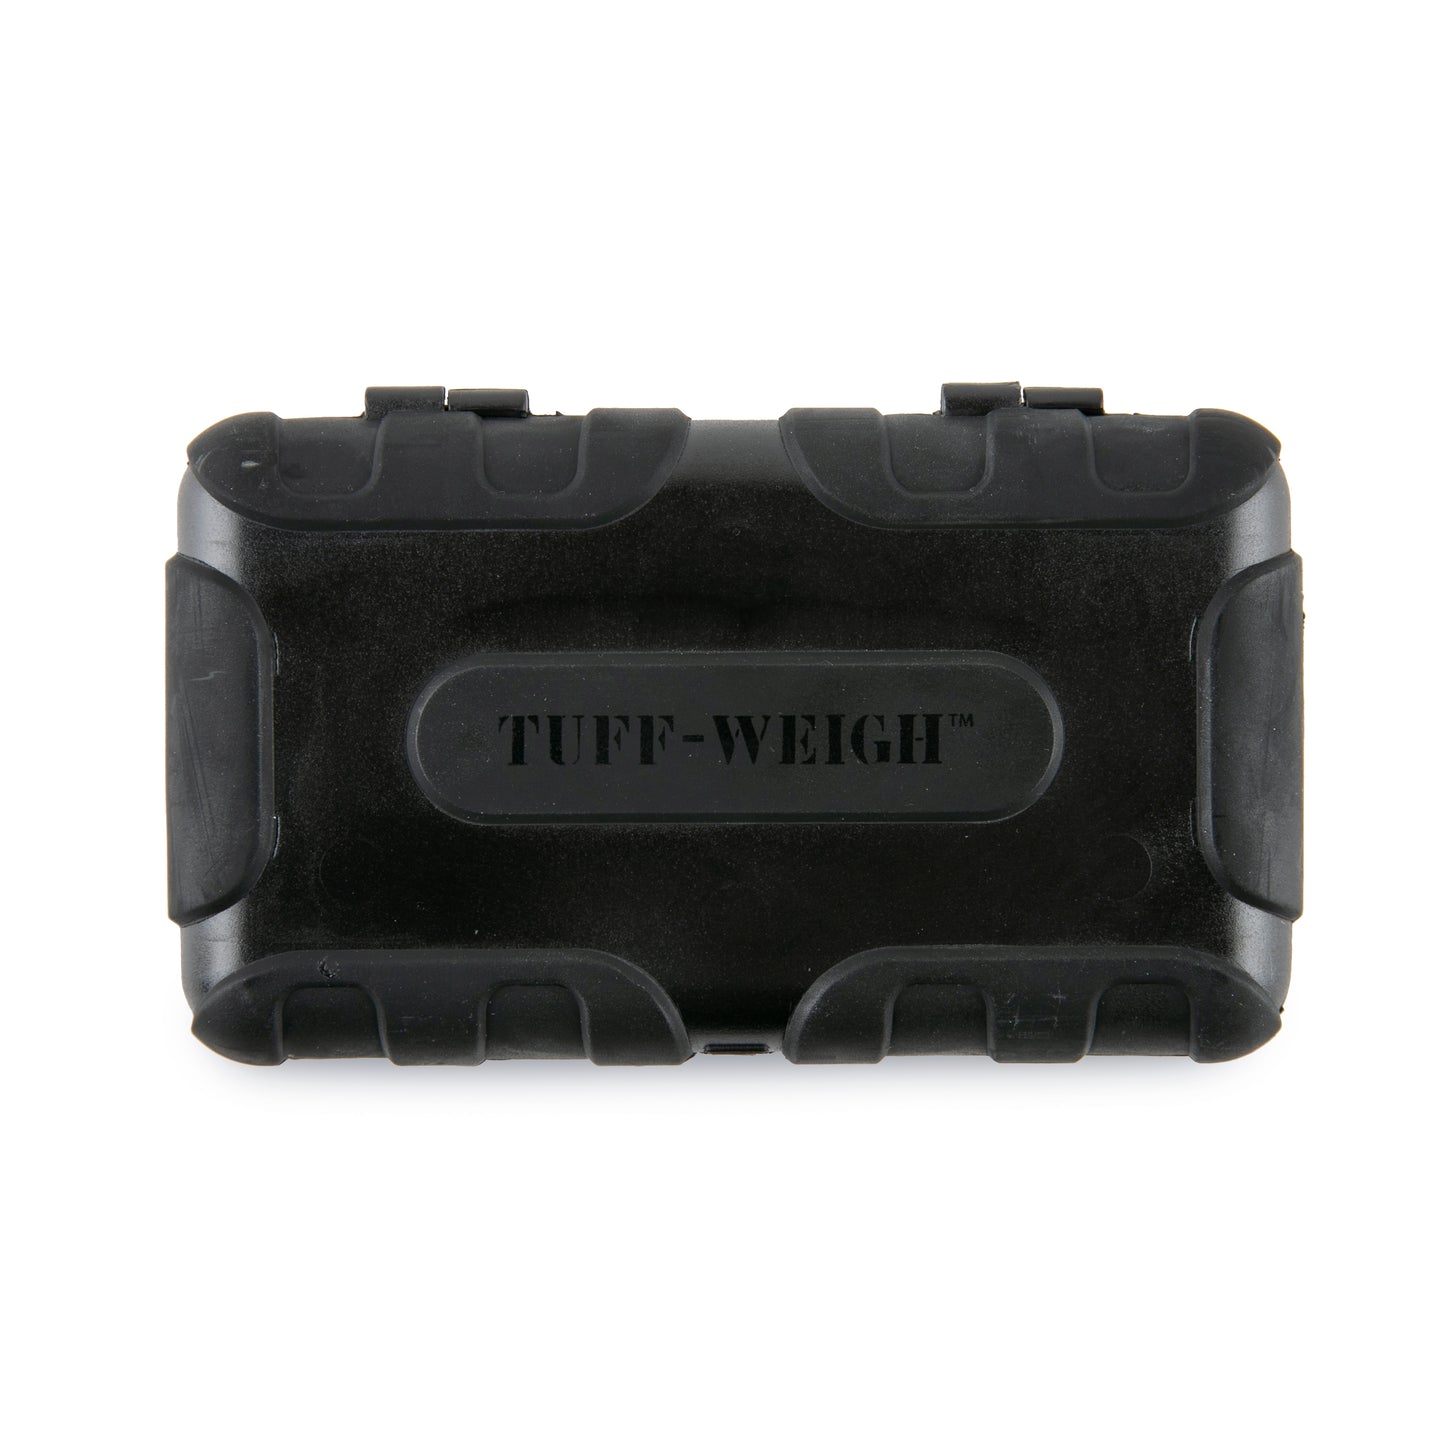 Truweigh Tuff-Weigh Digital Mini Scale 1000g x 0.1g Black/Black